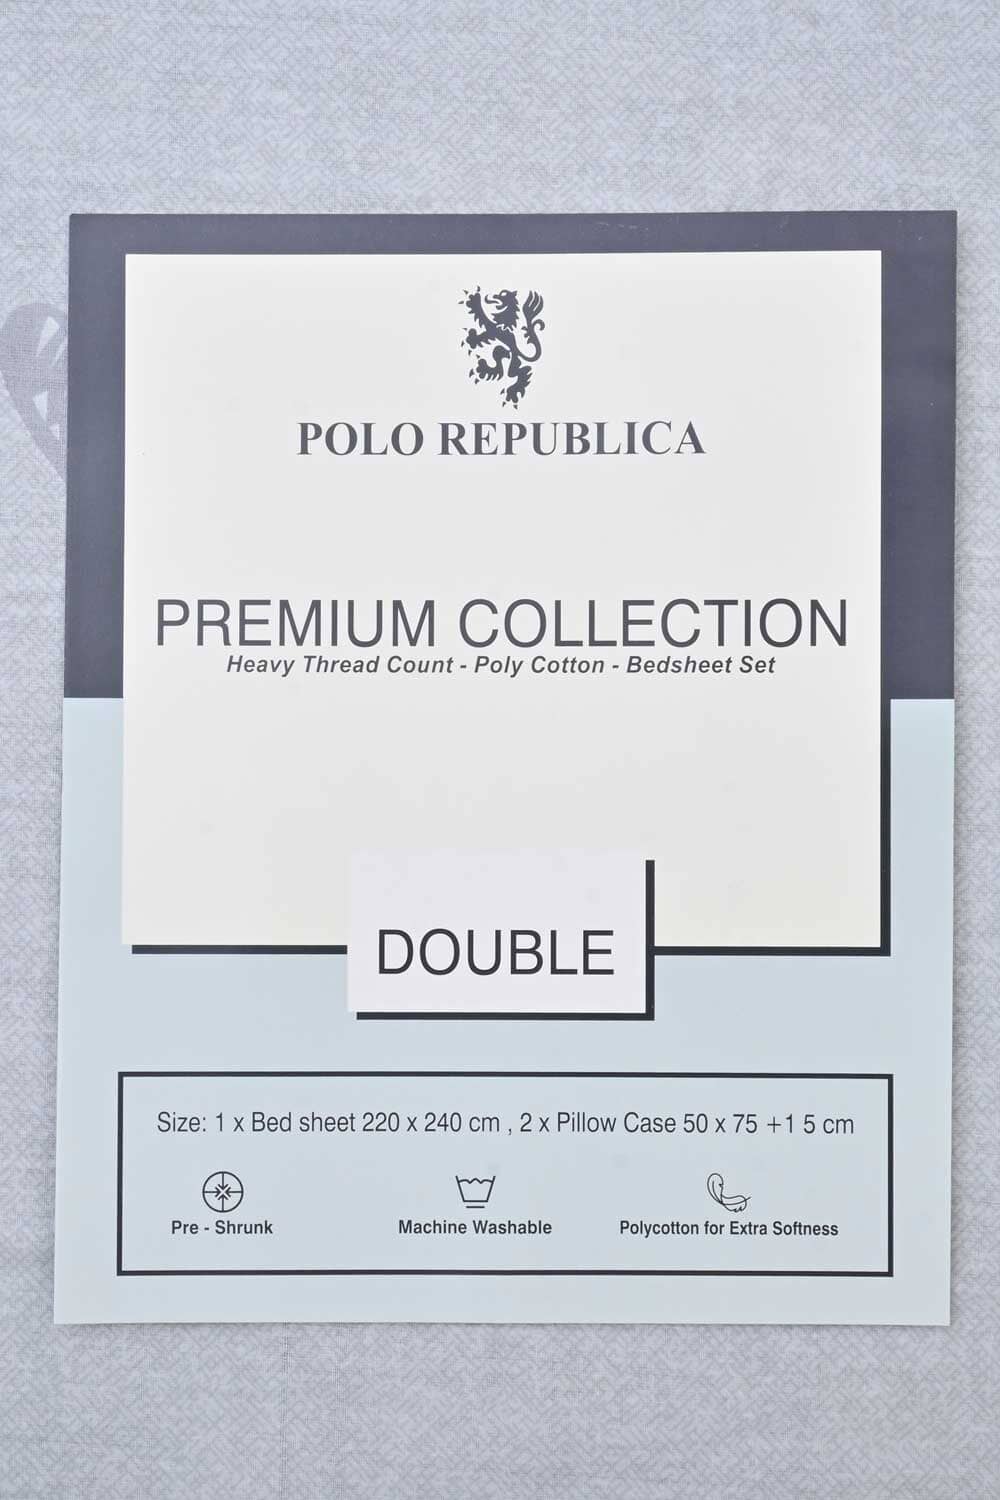 Polo Republica Phoenix Premium Collection 3 Piece Double Bed Sheet Bed Sheet Fiza 